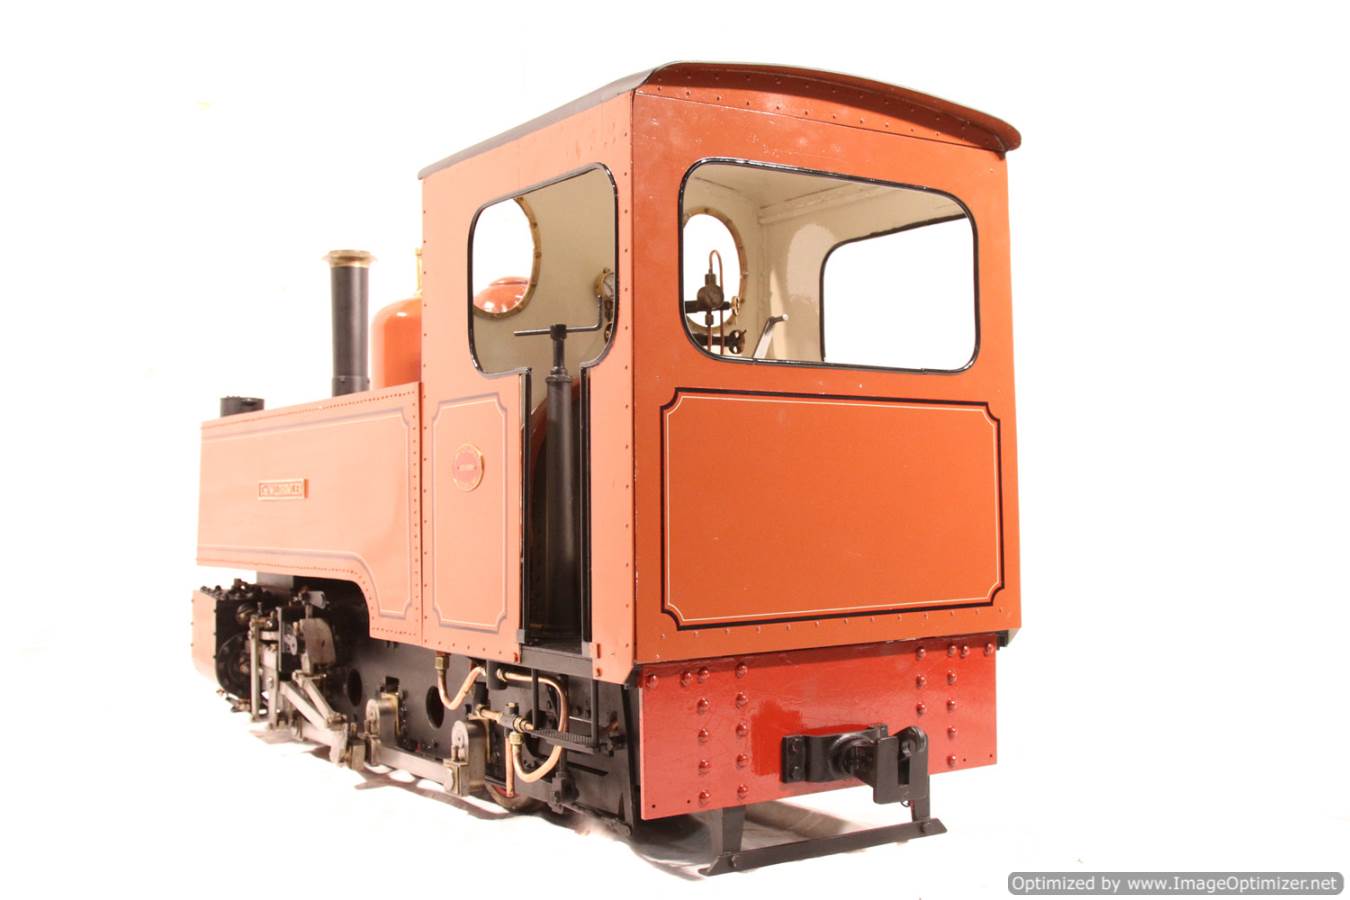 test 5 inch Gauge Fowler Live Steam Locomotive for sale 02 Optimized